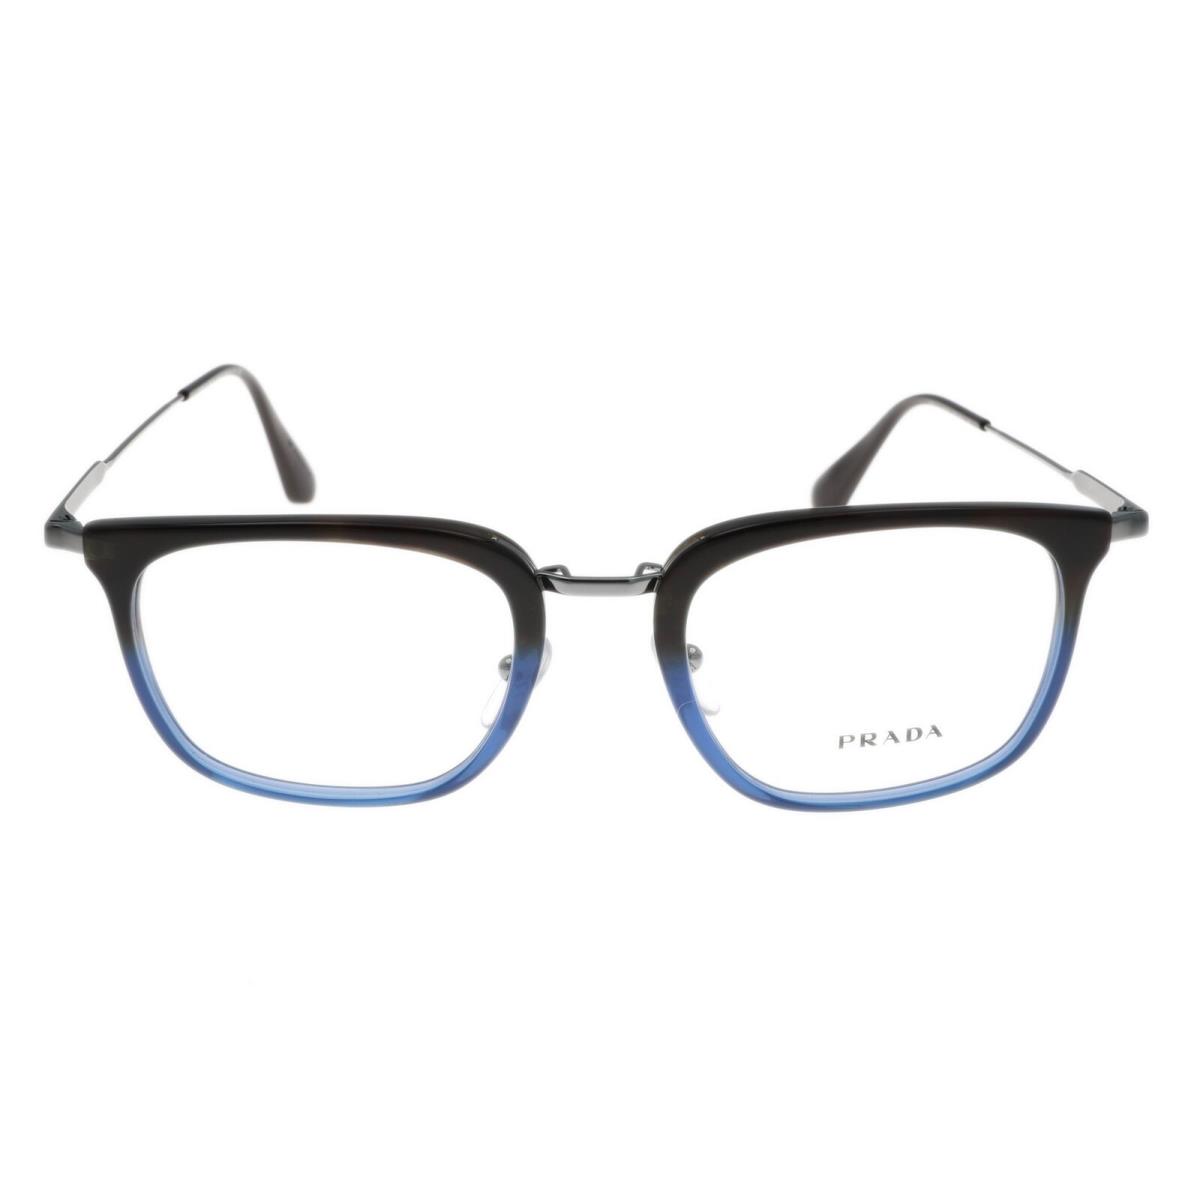 Prada 238416 Unisex Adult Vpr 11U Eyeglasses Frame Black Blue Size 51-21-150 - Black Blue, Frame: Black Blue